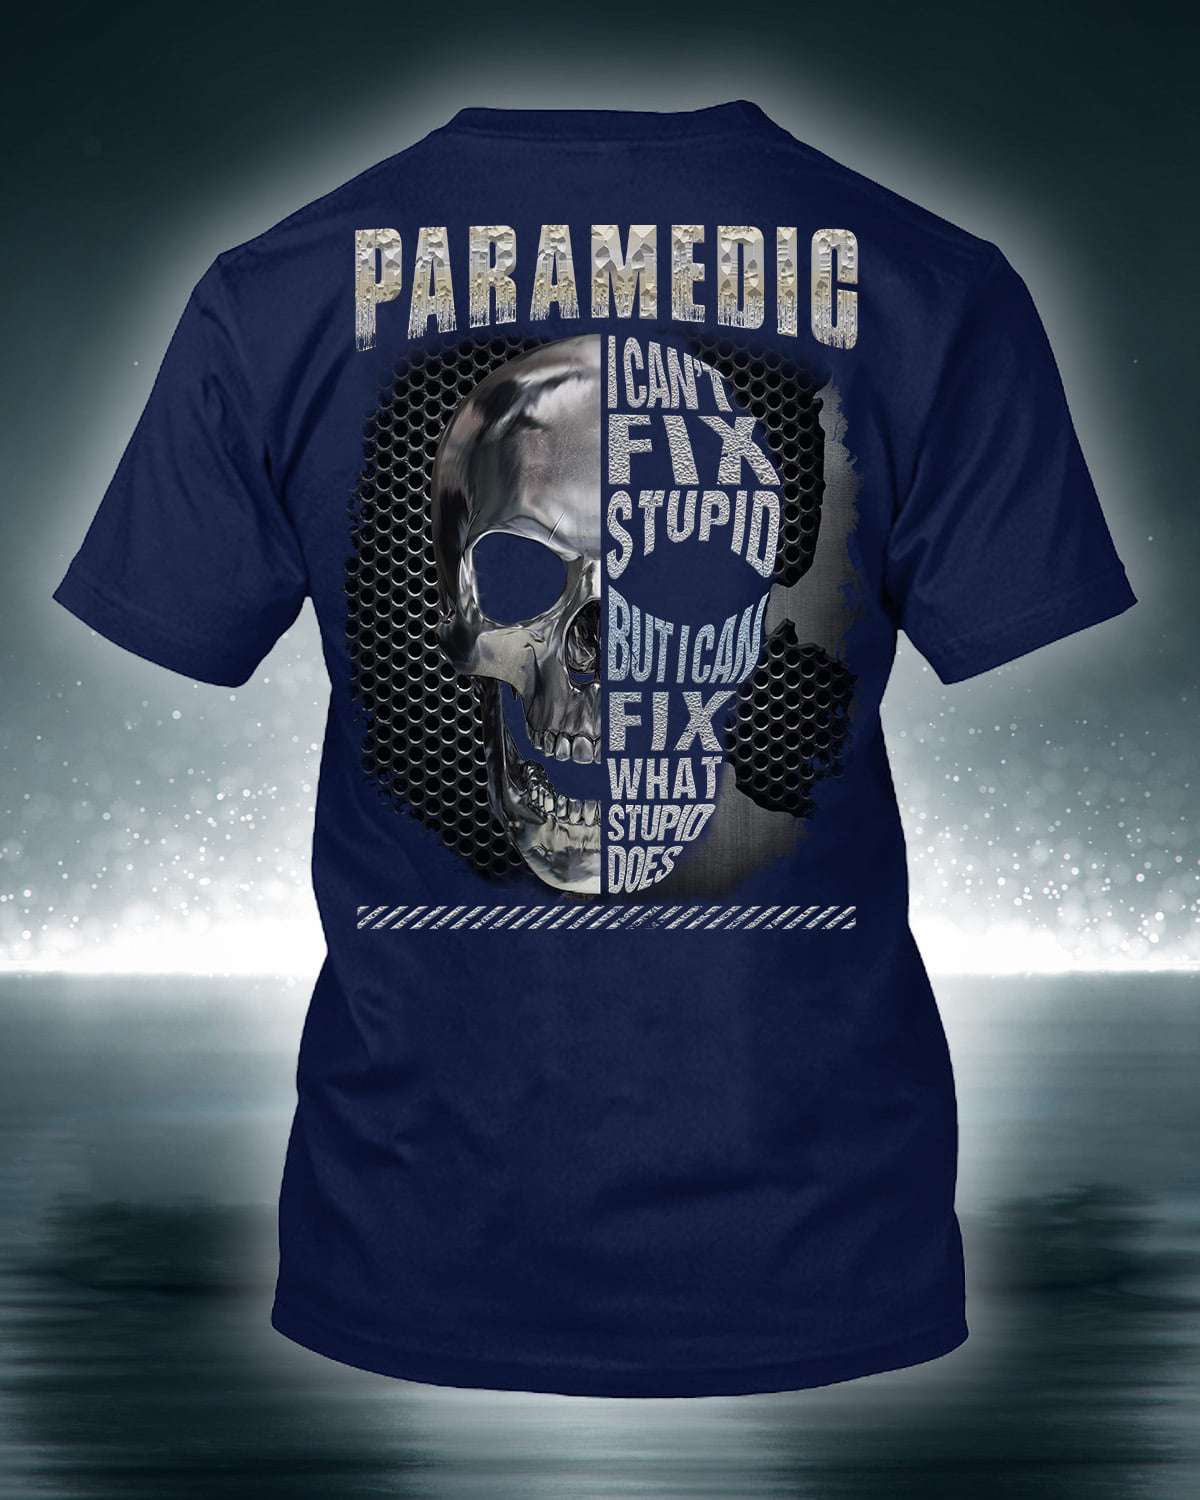 Paramedic Skull - Paramedic I can't fix stupid but i can fix what stupid does